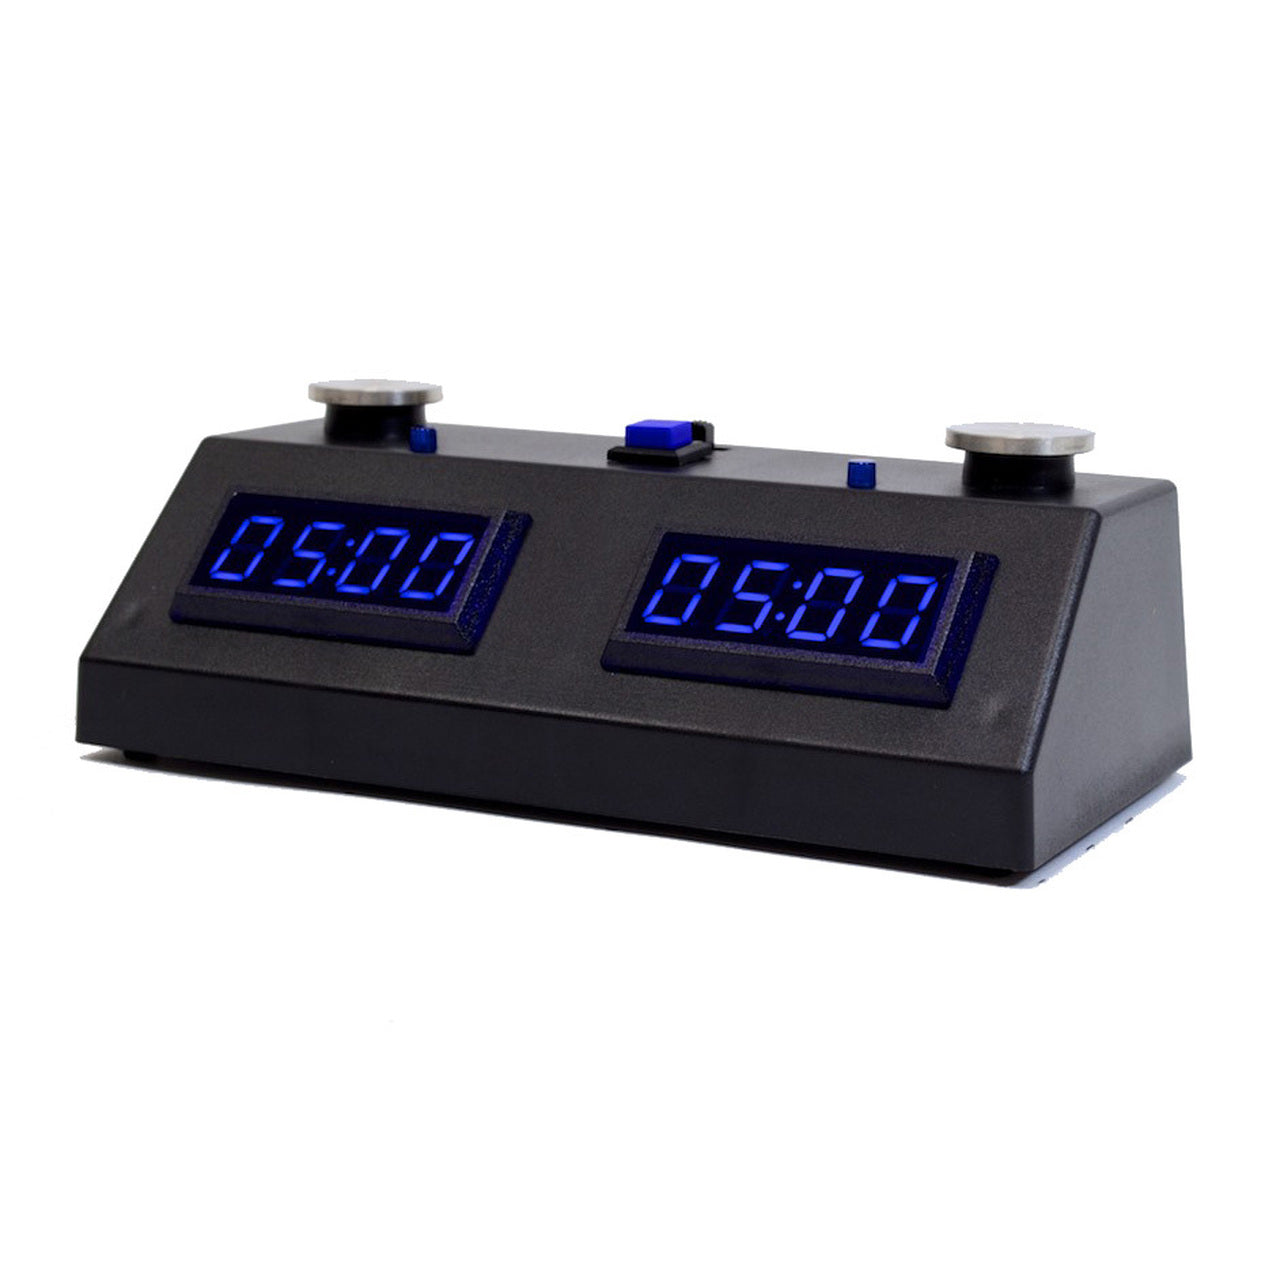 ZMF-II Digital Chess Timer black with blue LED